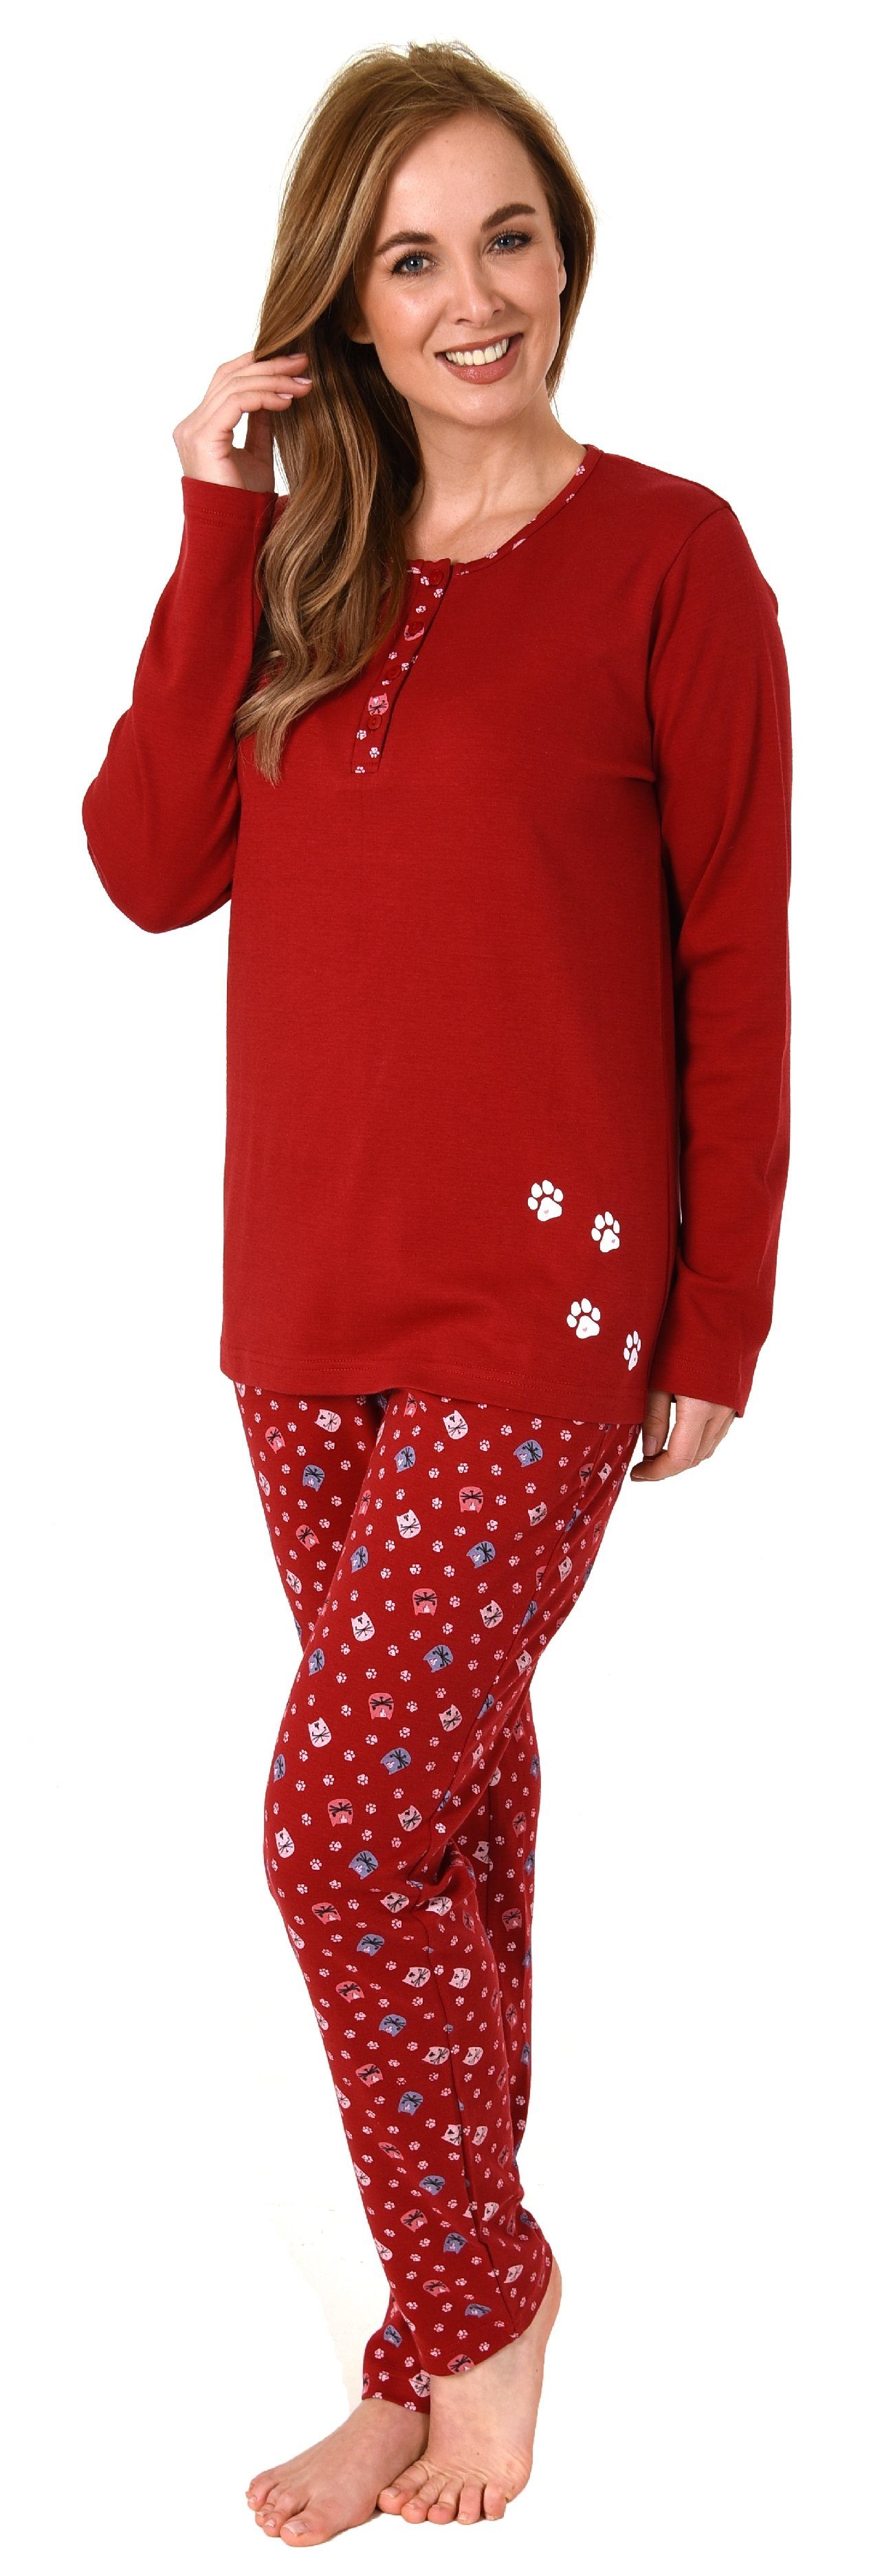 Normann Pyjama Damen Pyjama langarm Schlafanzug mit niedlichem Tier Motiv rot